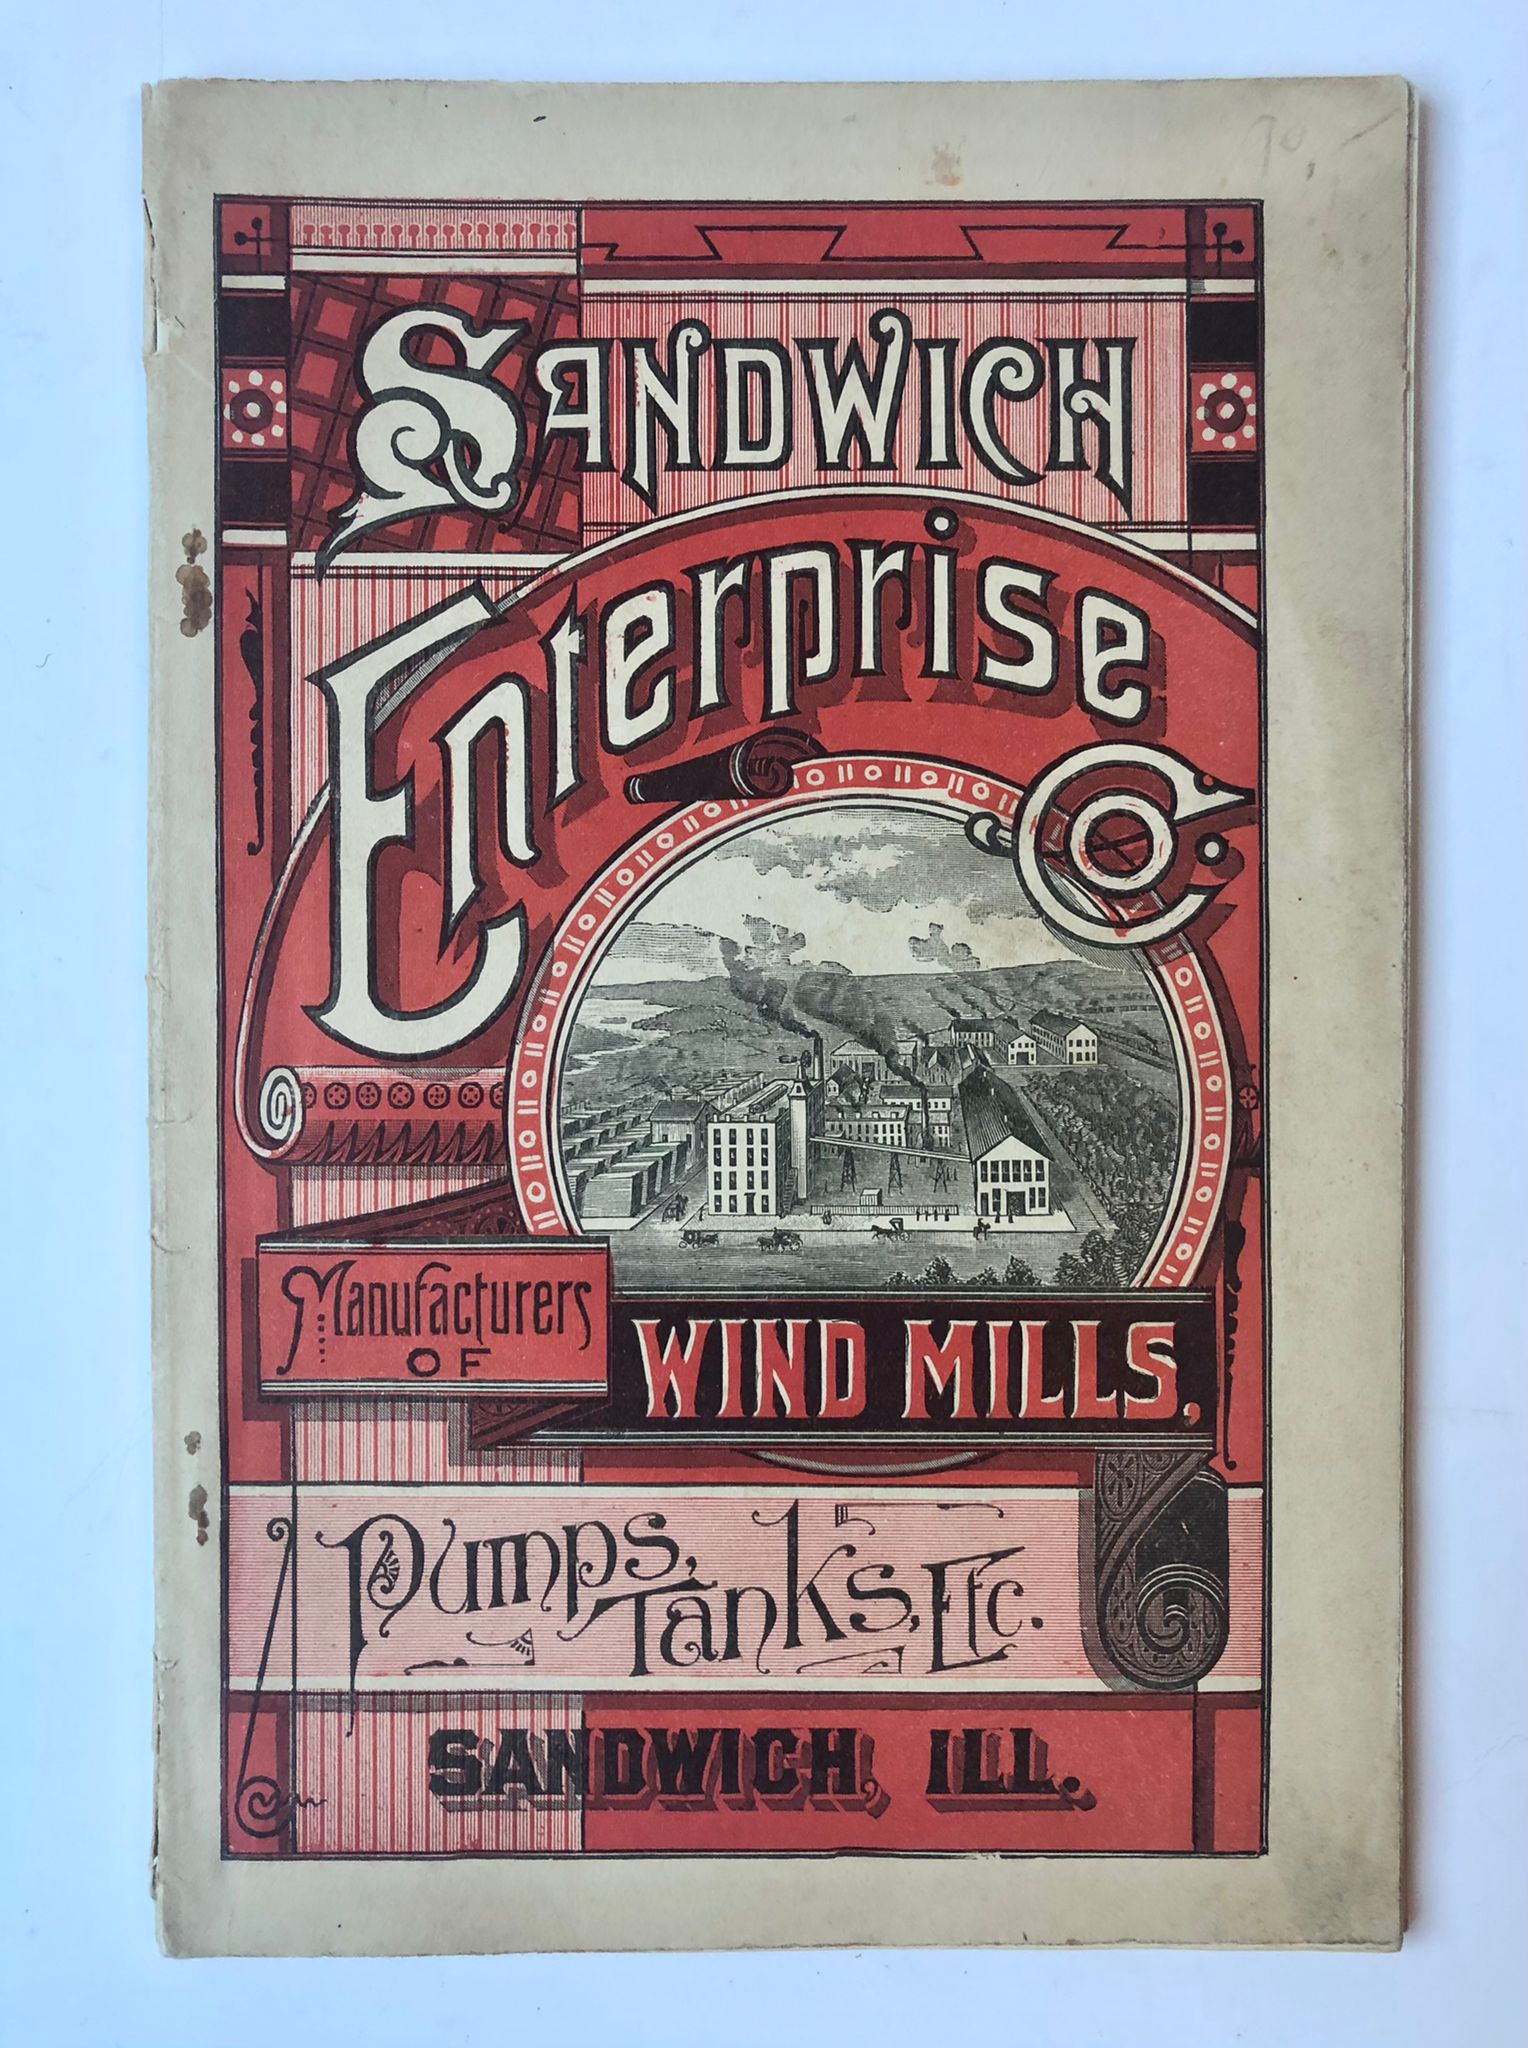 [Science, windmills, waterpumps [1890]] Prospectus Sandwich Enterprise. Manufacturers of Wind mills, pumps, tanks etc. Sandwich Ill. Z. j. (ca. 1890?), 64 pag., geillustreerd.